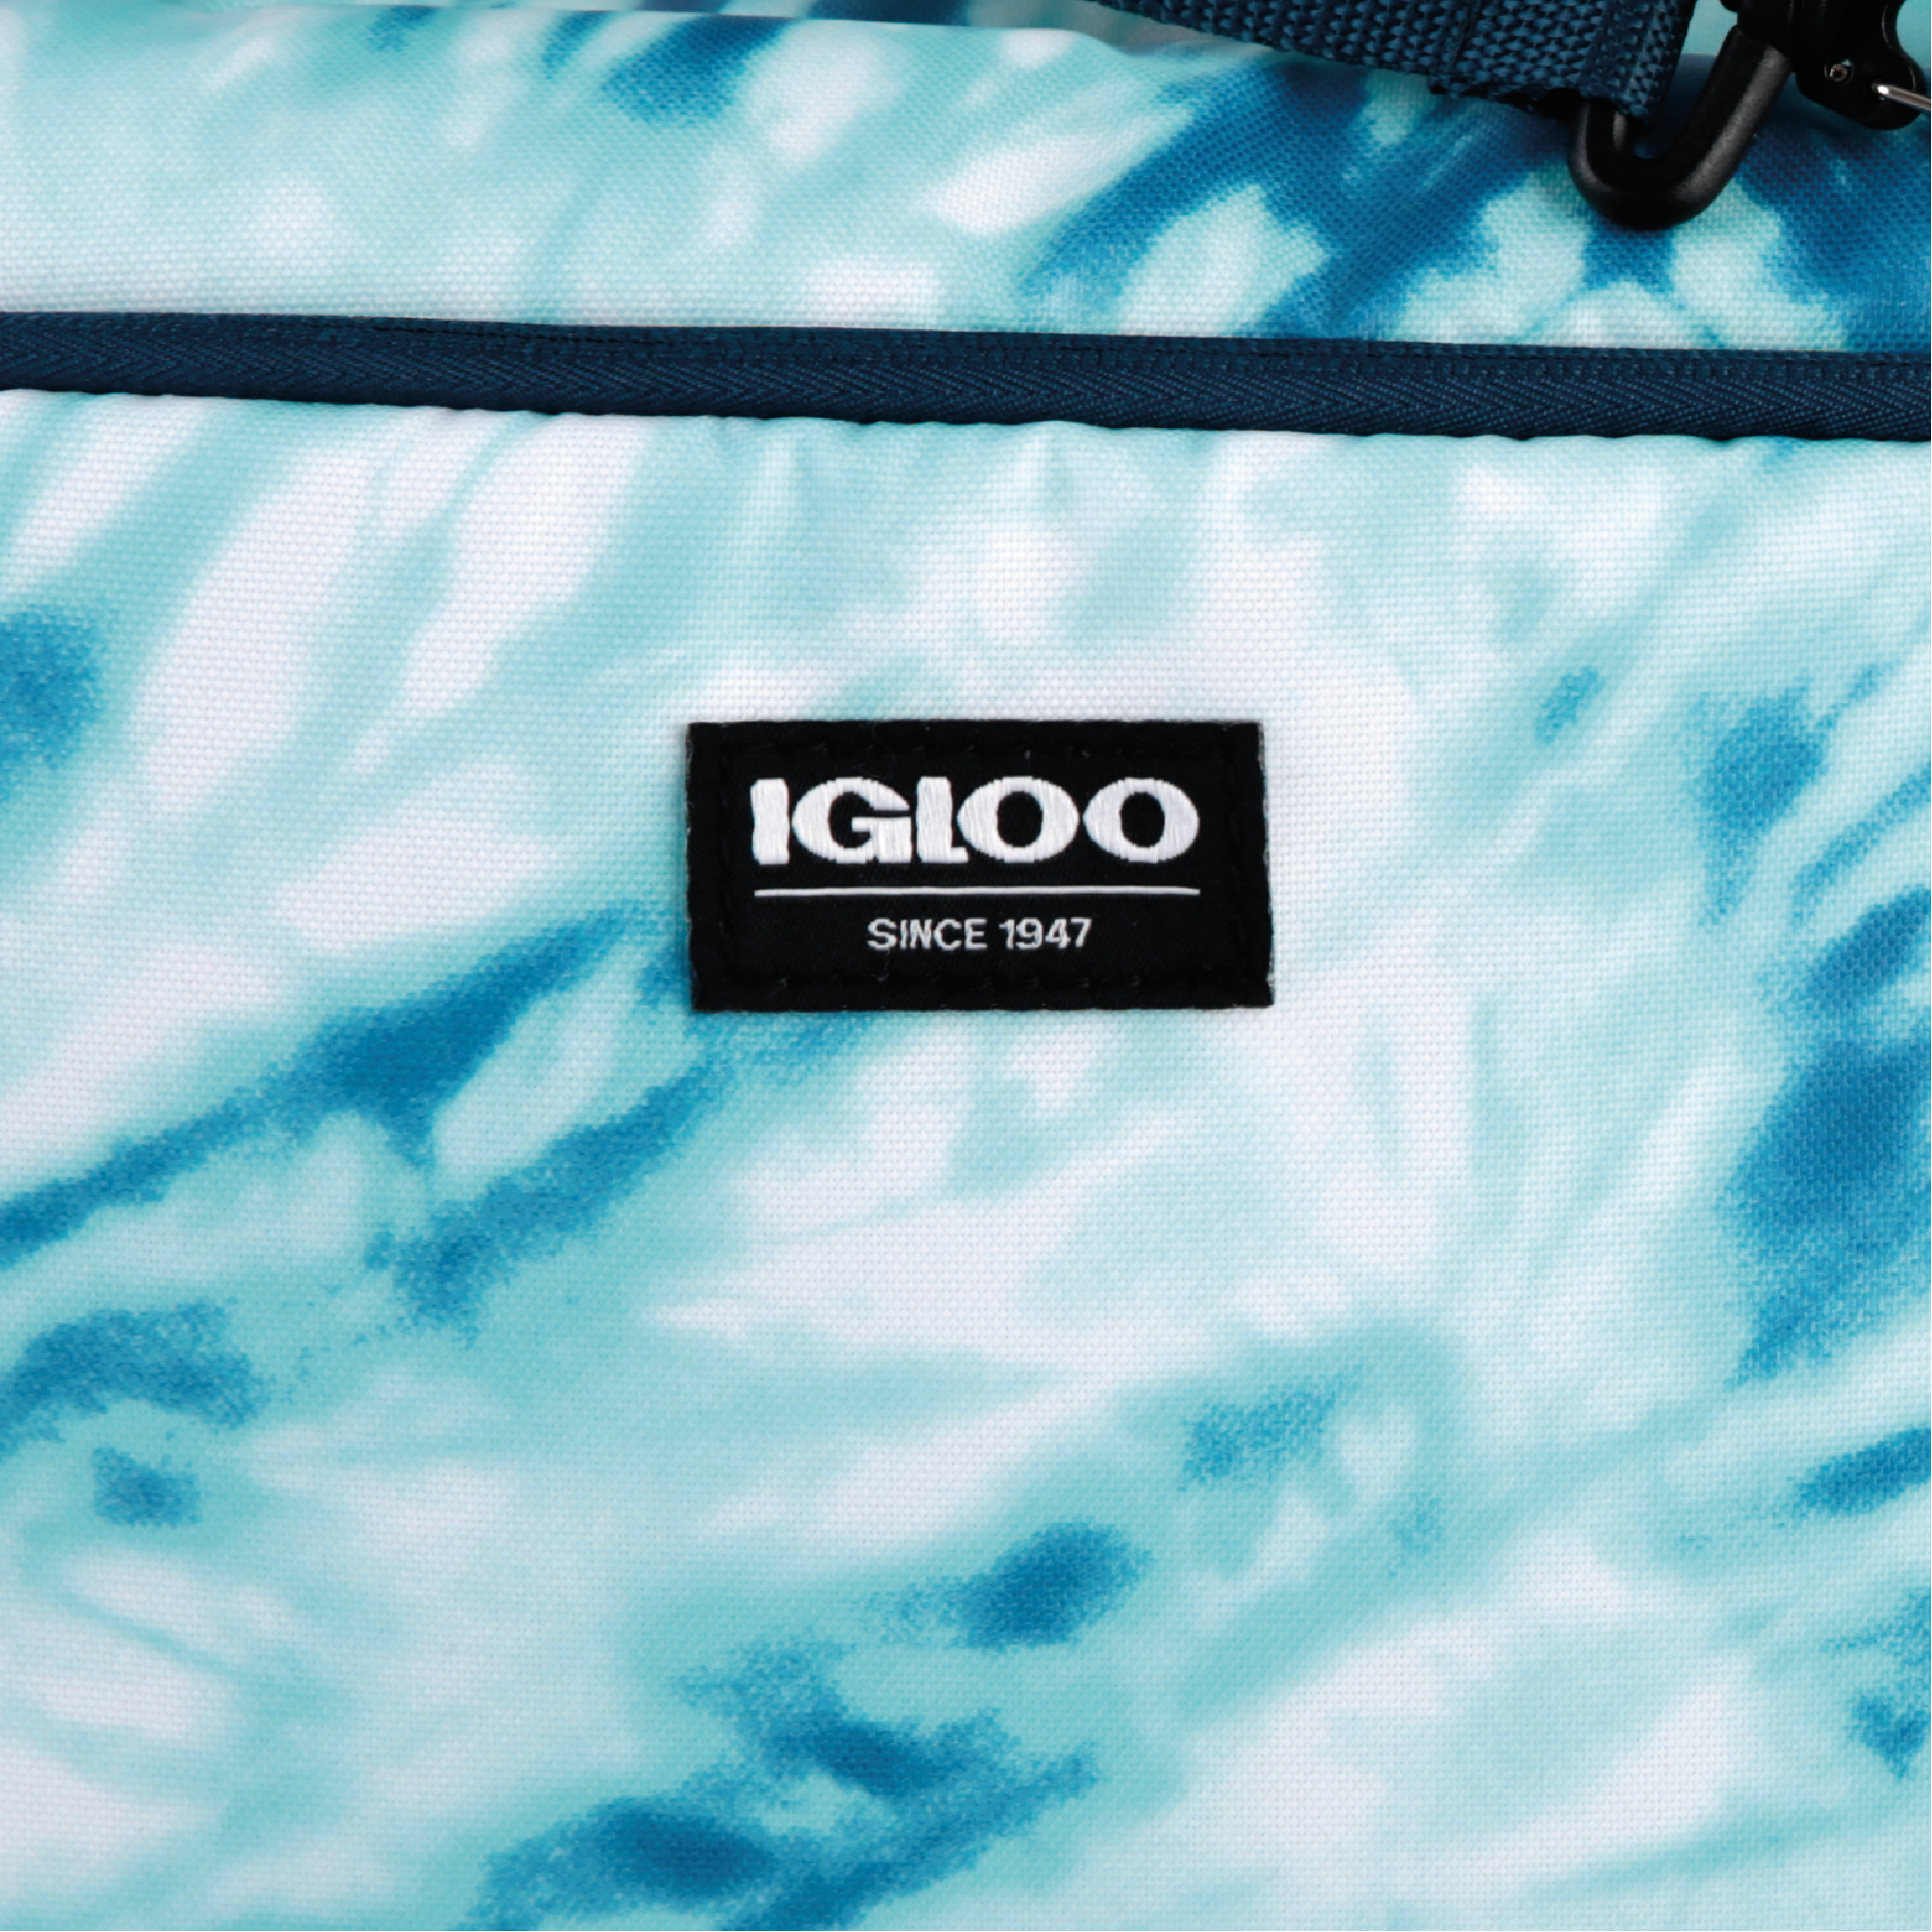 Igloo coolers | Since 1947